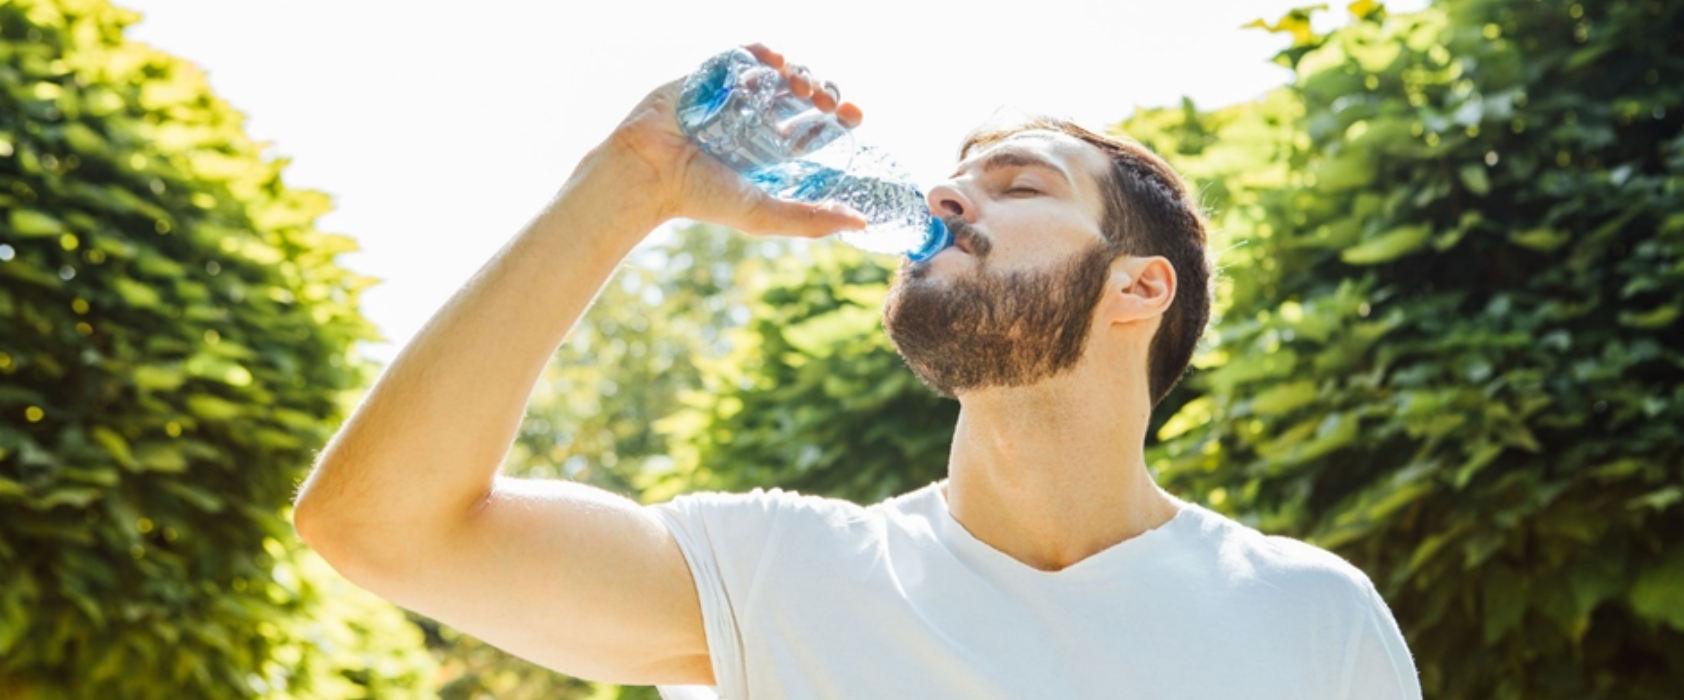 A man in a garden drinking water from a bottle